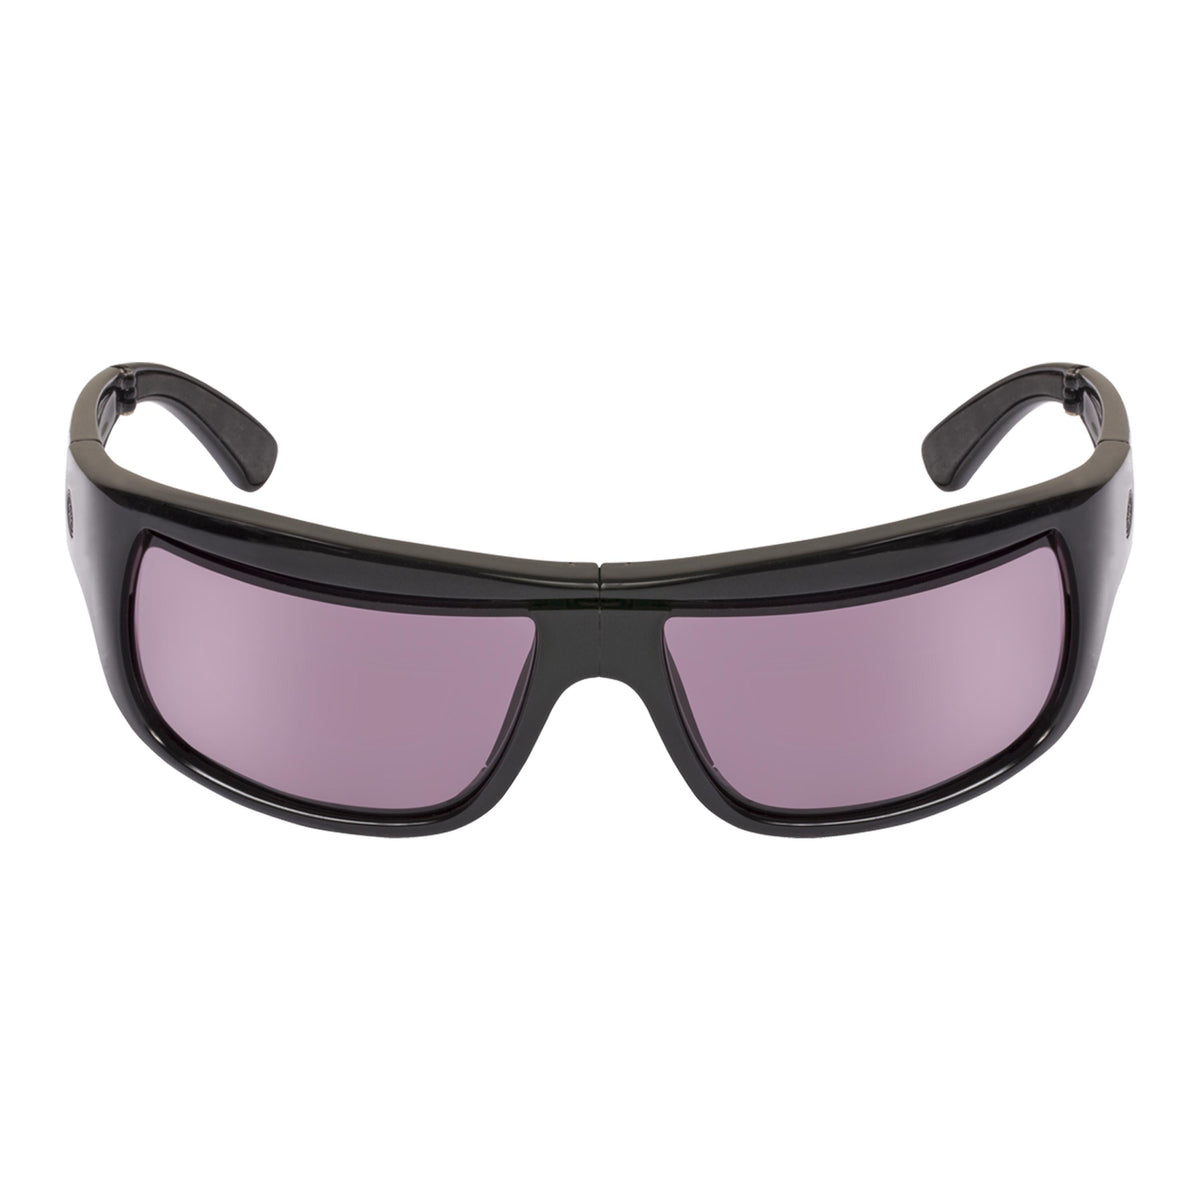 Popticals, Premium Compact Sunglasses, PopH2O, 200070-BGVS, Polarized Sunglasses, Gloss Black Frame, Violet Golf Lenses, Front View